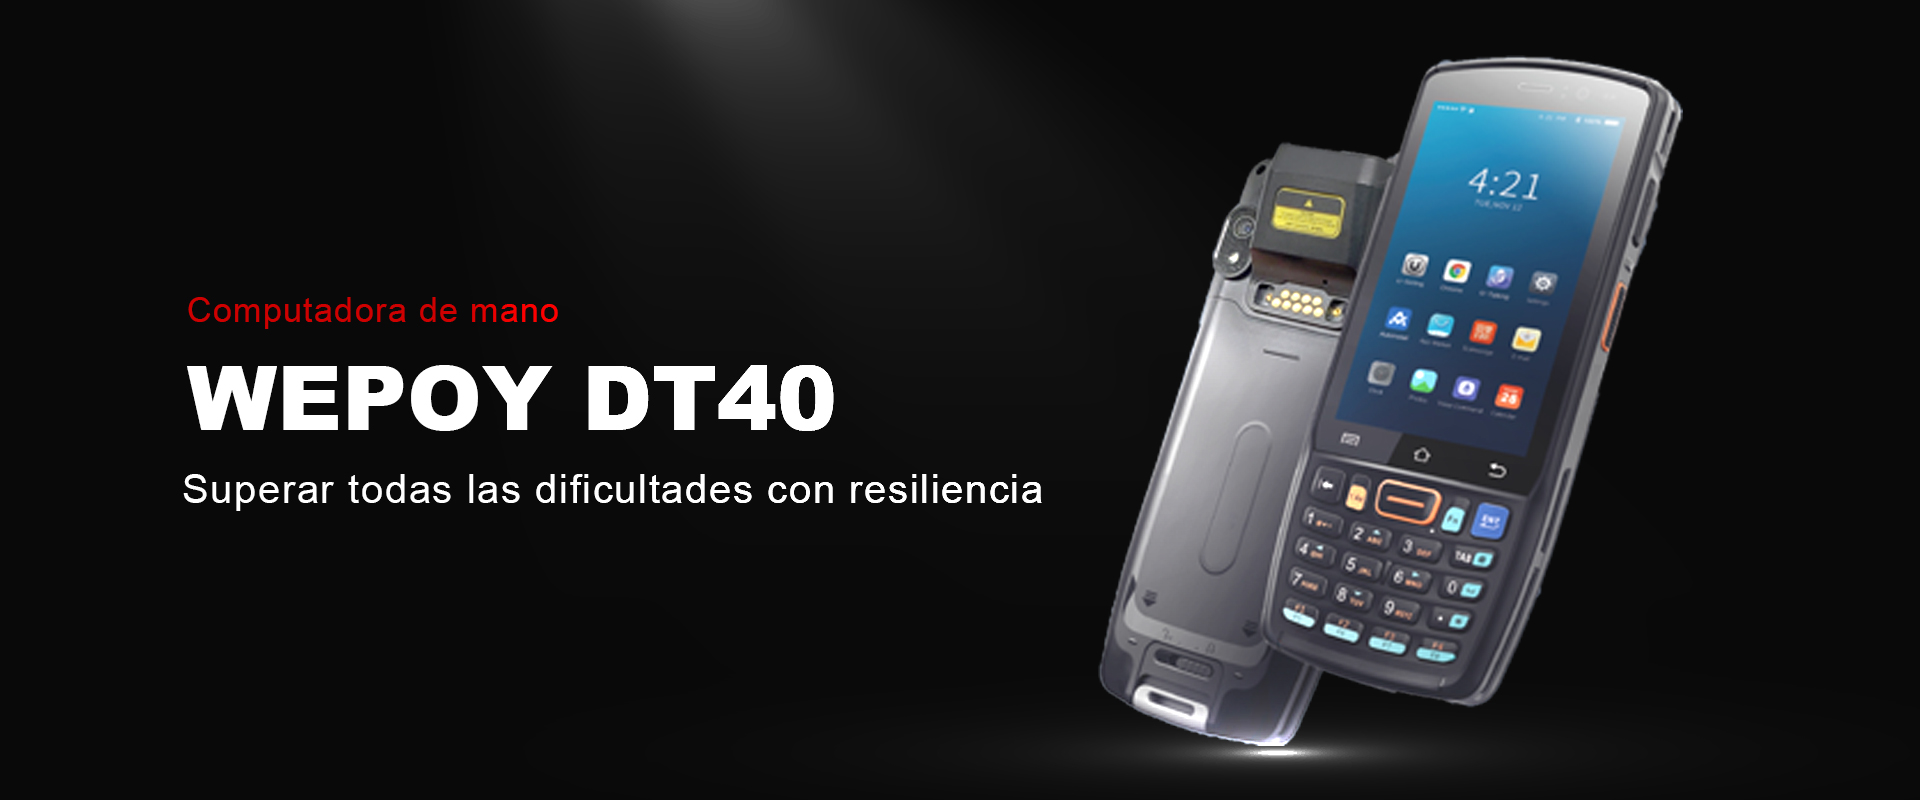 DT40-PDA_01.jpg